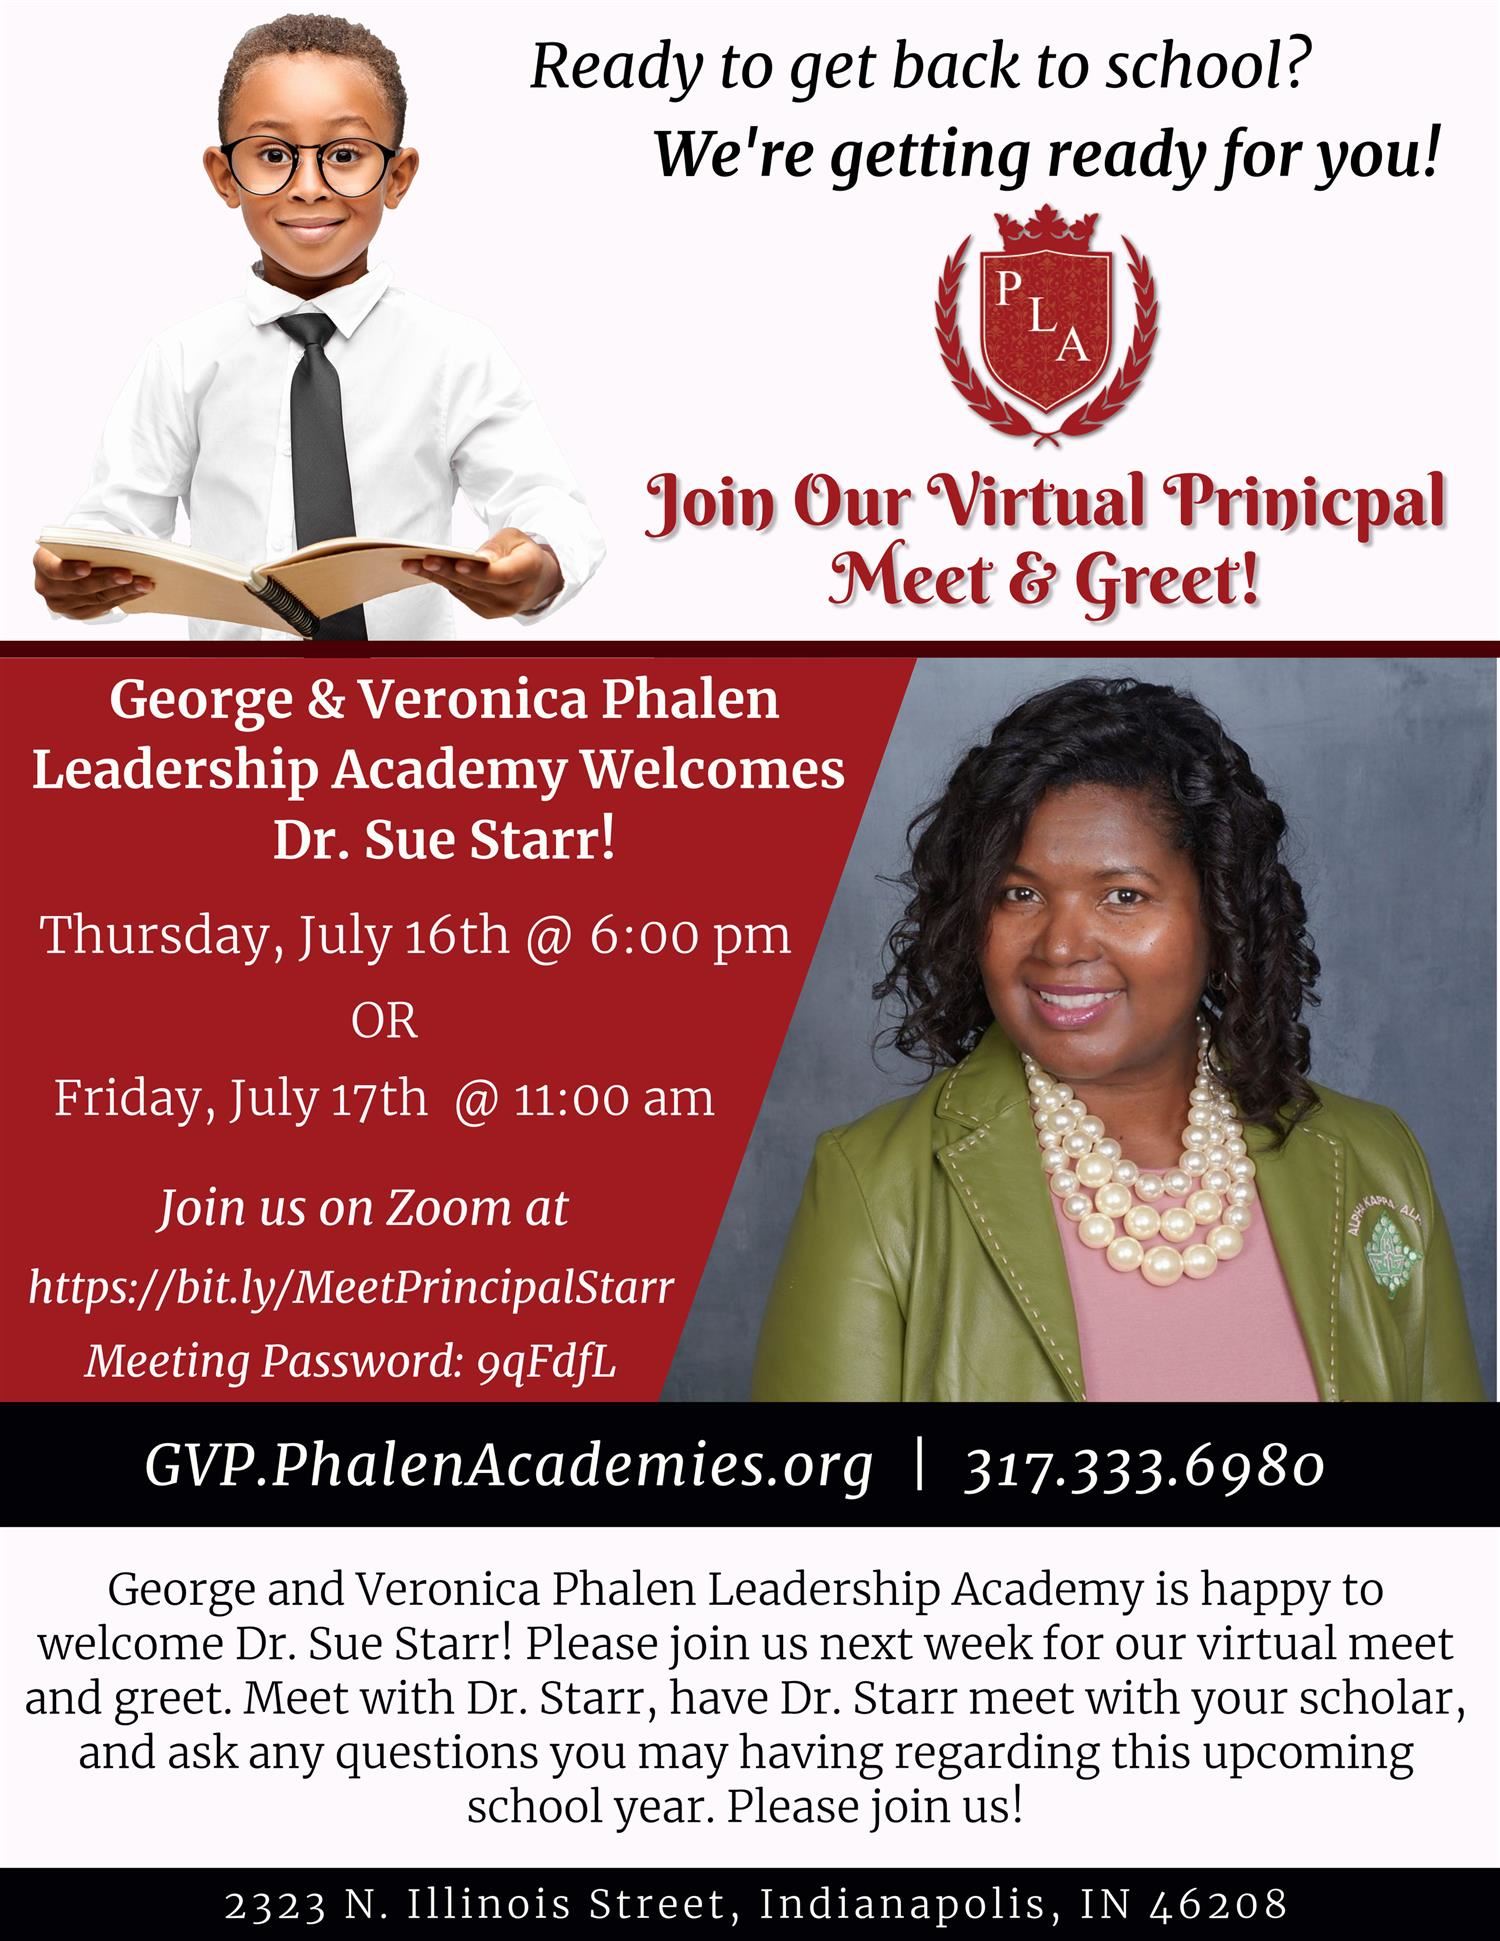  Phalen Leadership Academies at GVPLA 